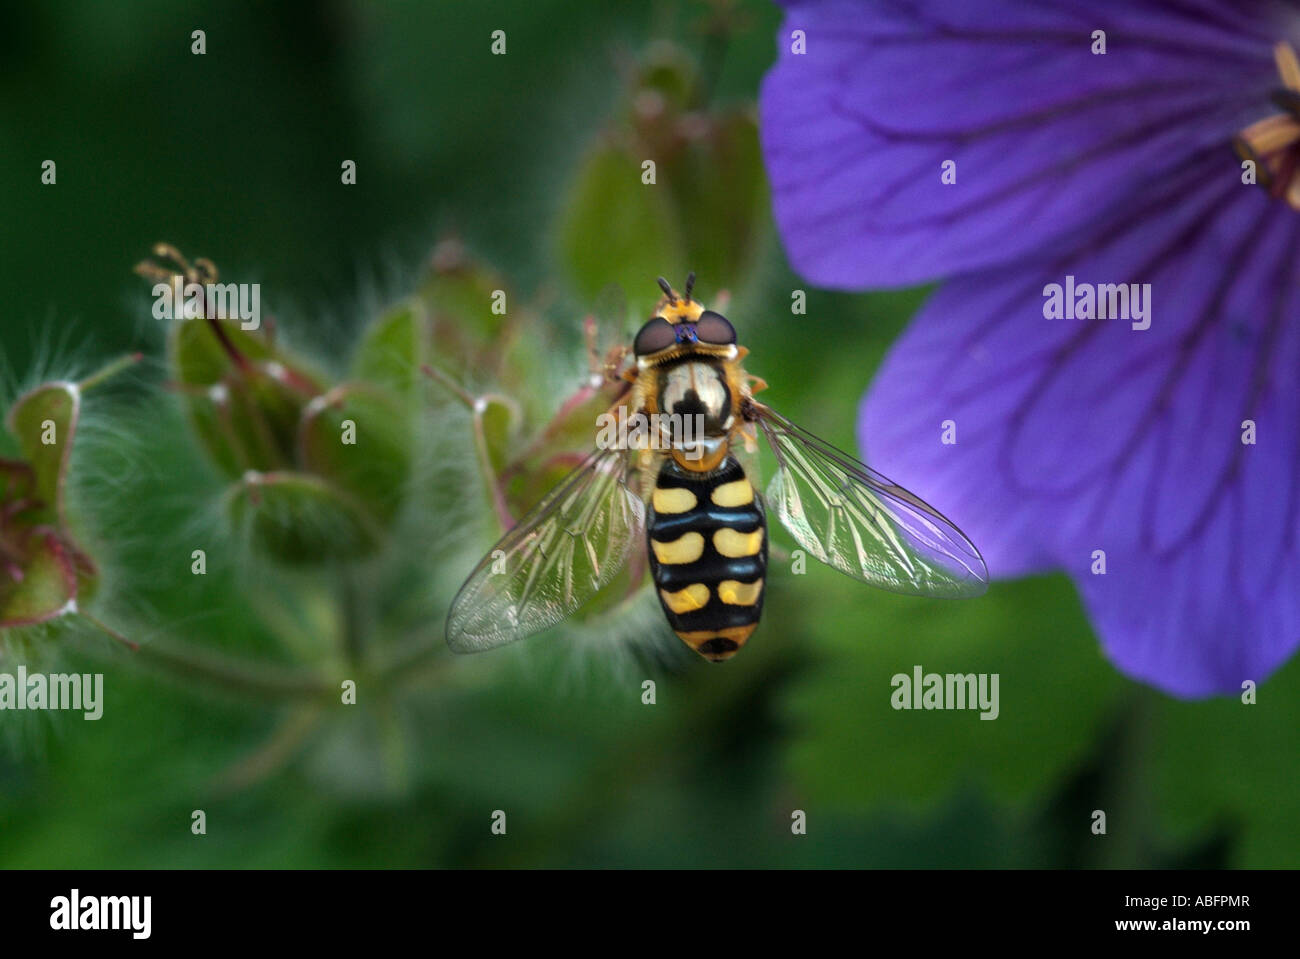 Hoverfly Syrphid Fliege Diptera Wespe Insekten imitieren Closeup Nahaufnahme Makro lila Geranium gemeinsame Blume England UK-Vereinigtes Königreich-G Stockfoto